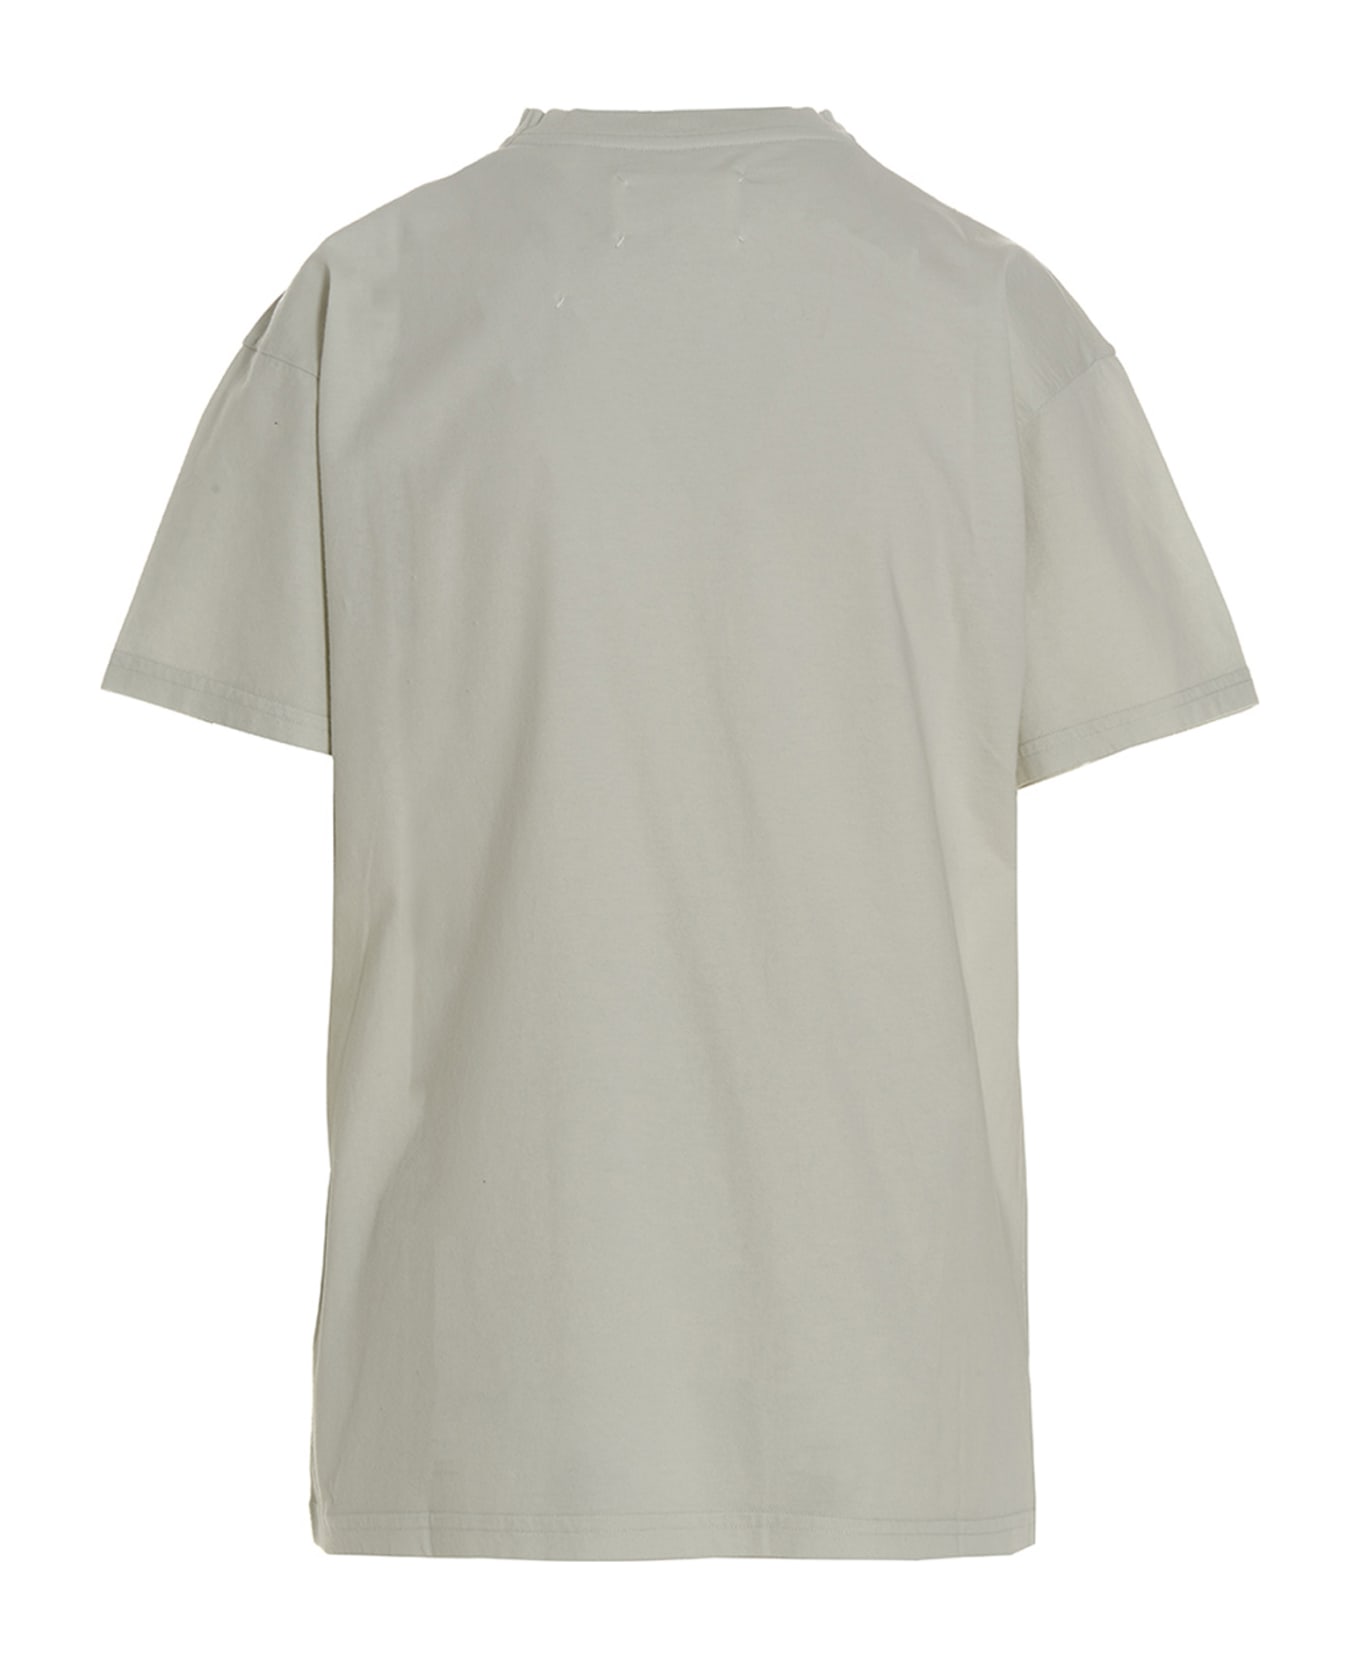 Maison Margiela Logo Print T-shirt - Gray Tシャツ